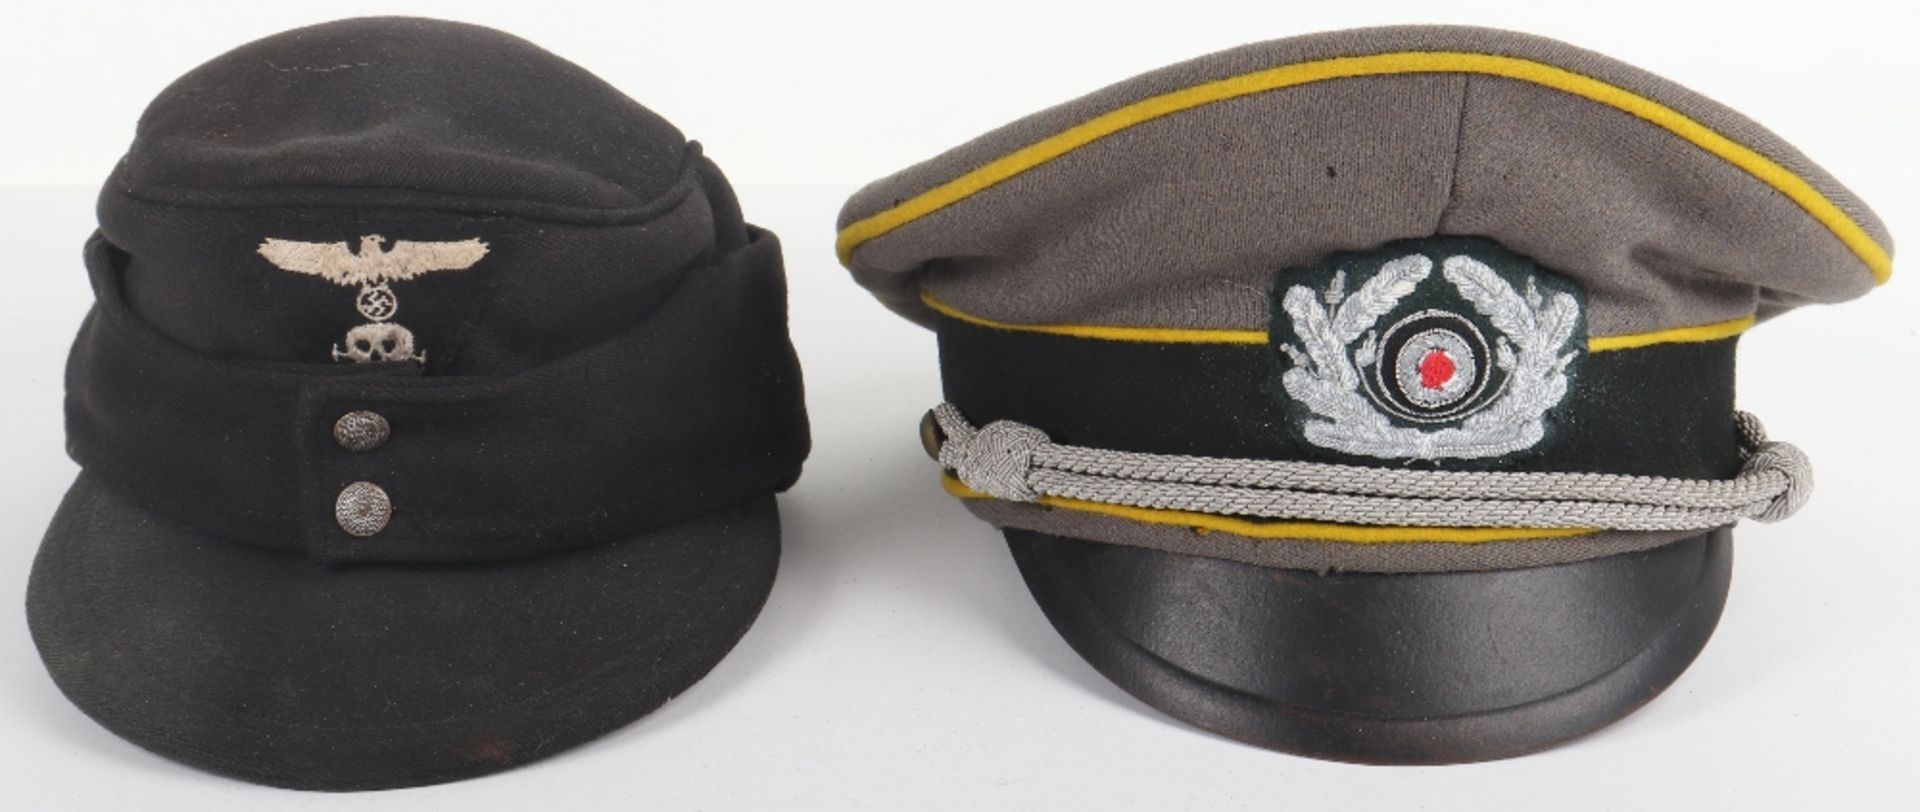 WW2 Style German Hats